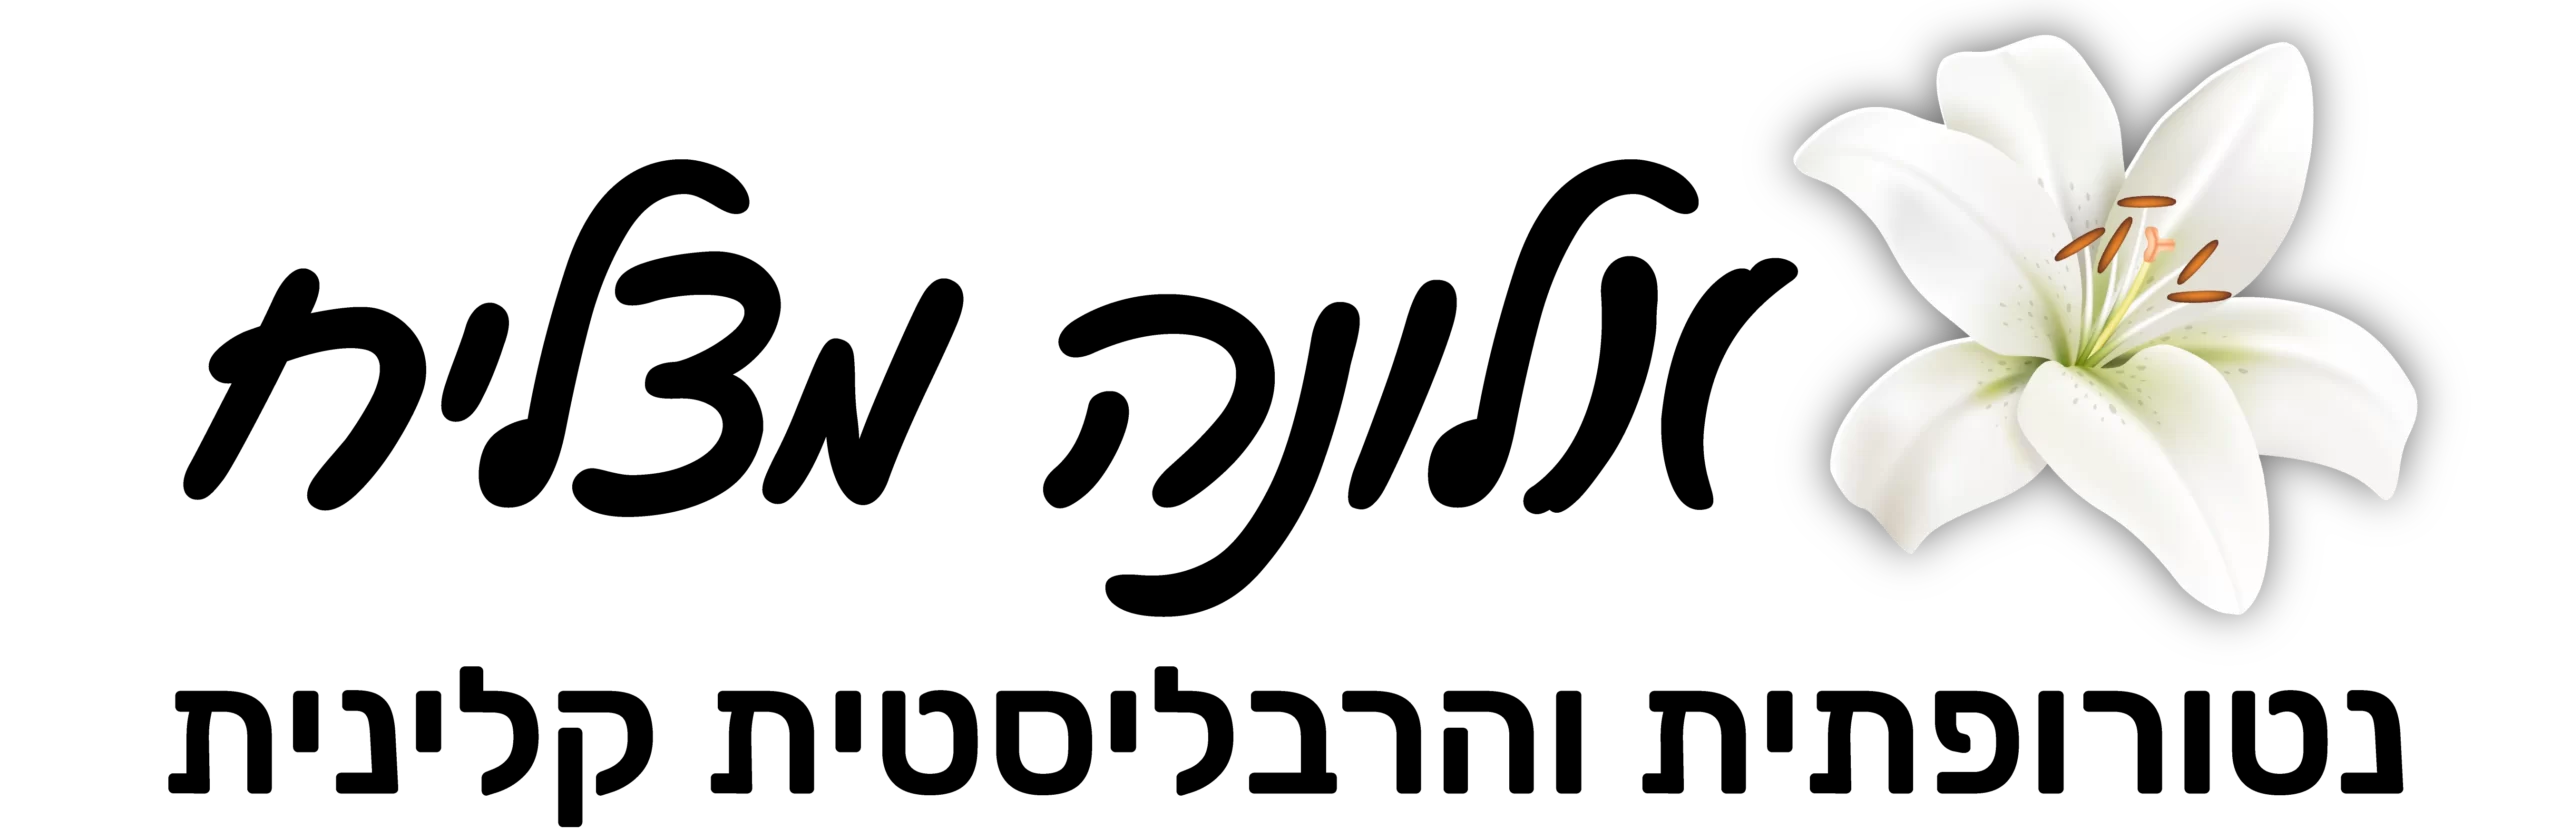 Alona matsliah site logo